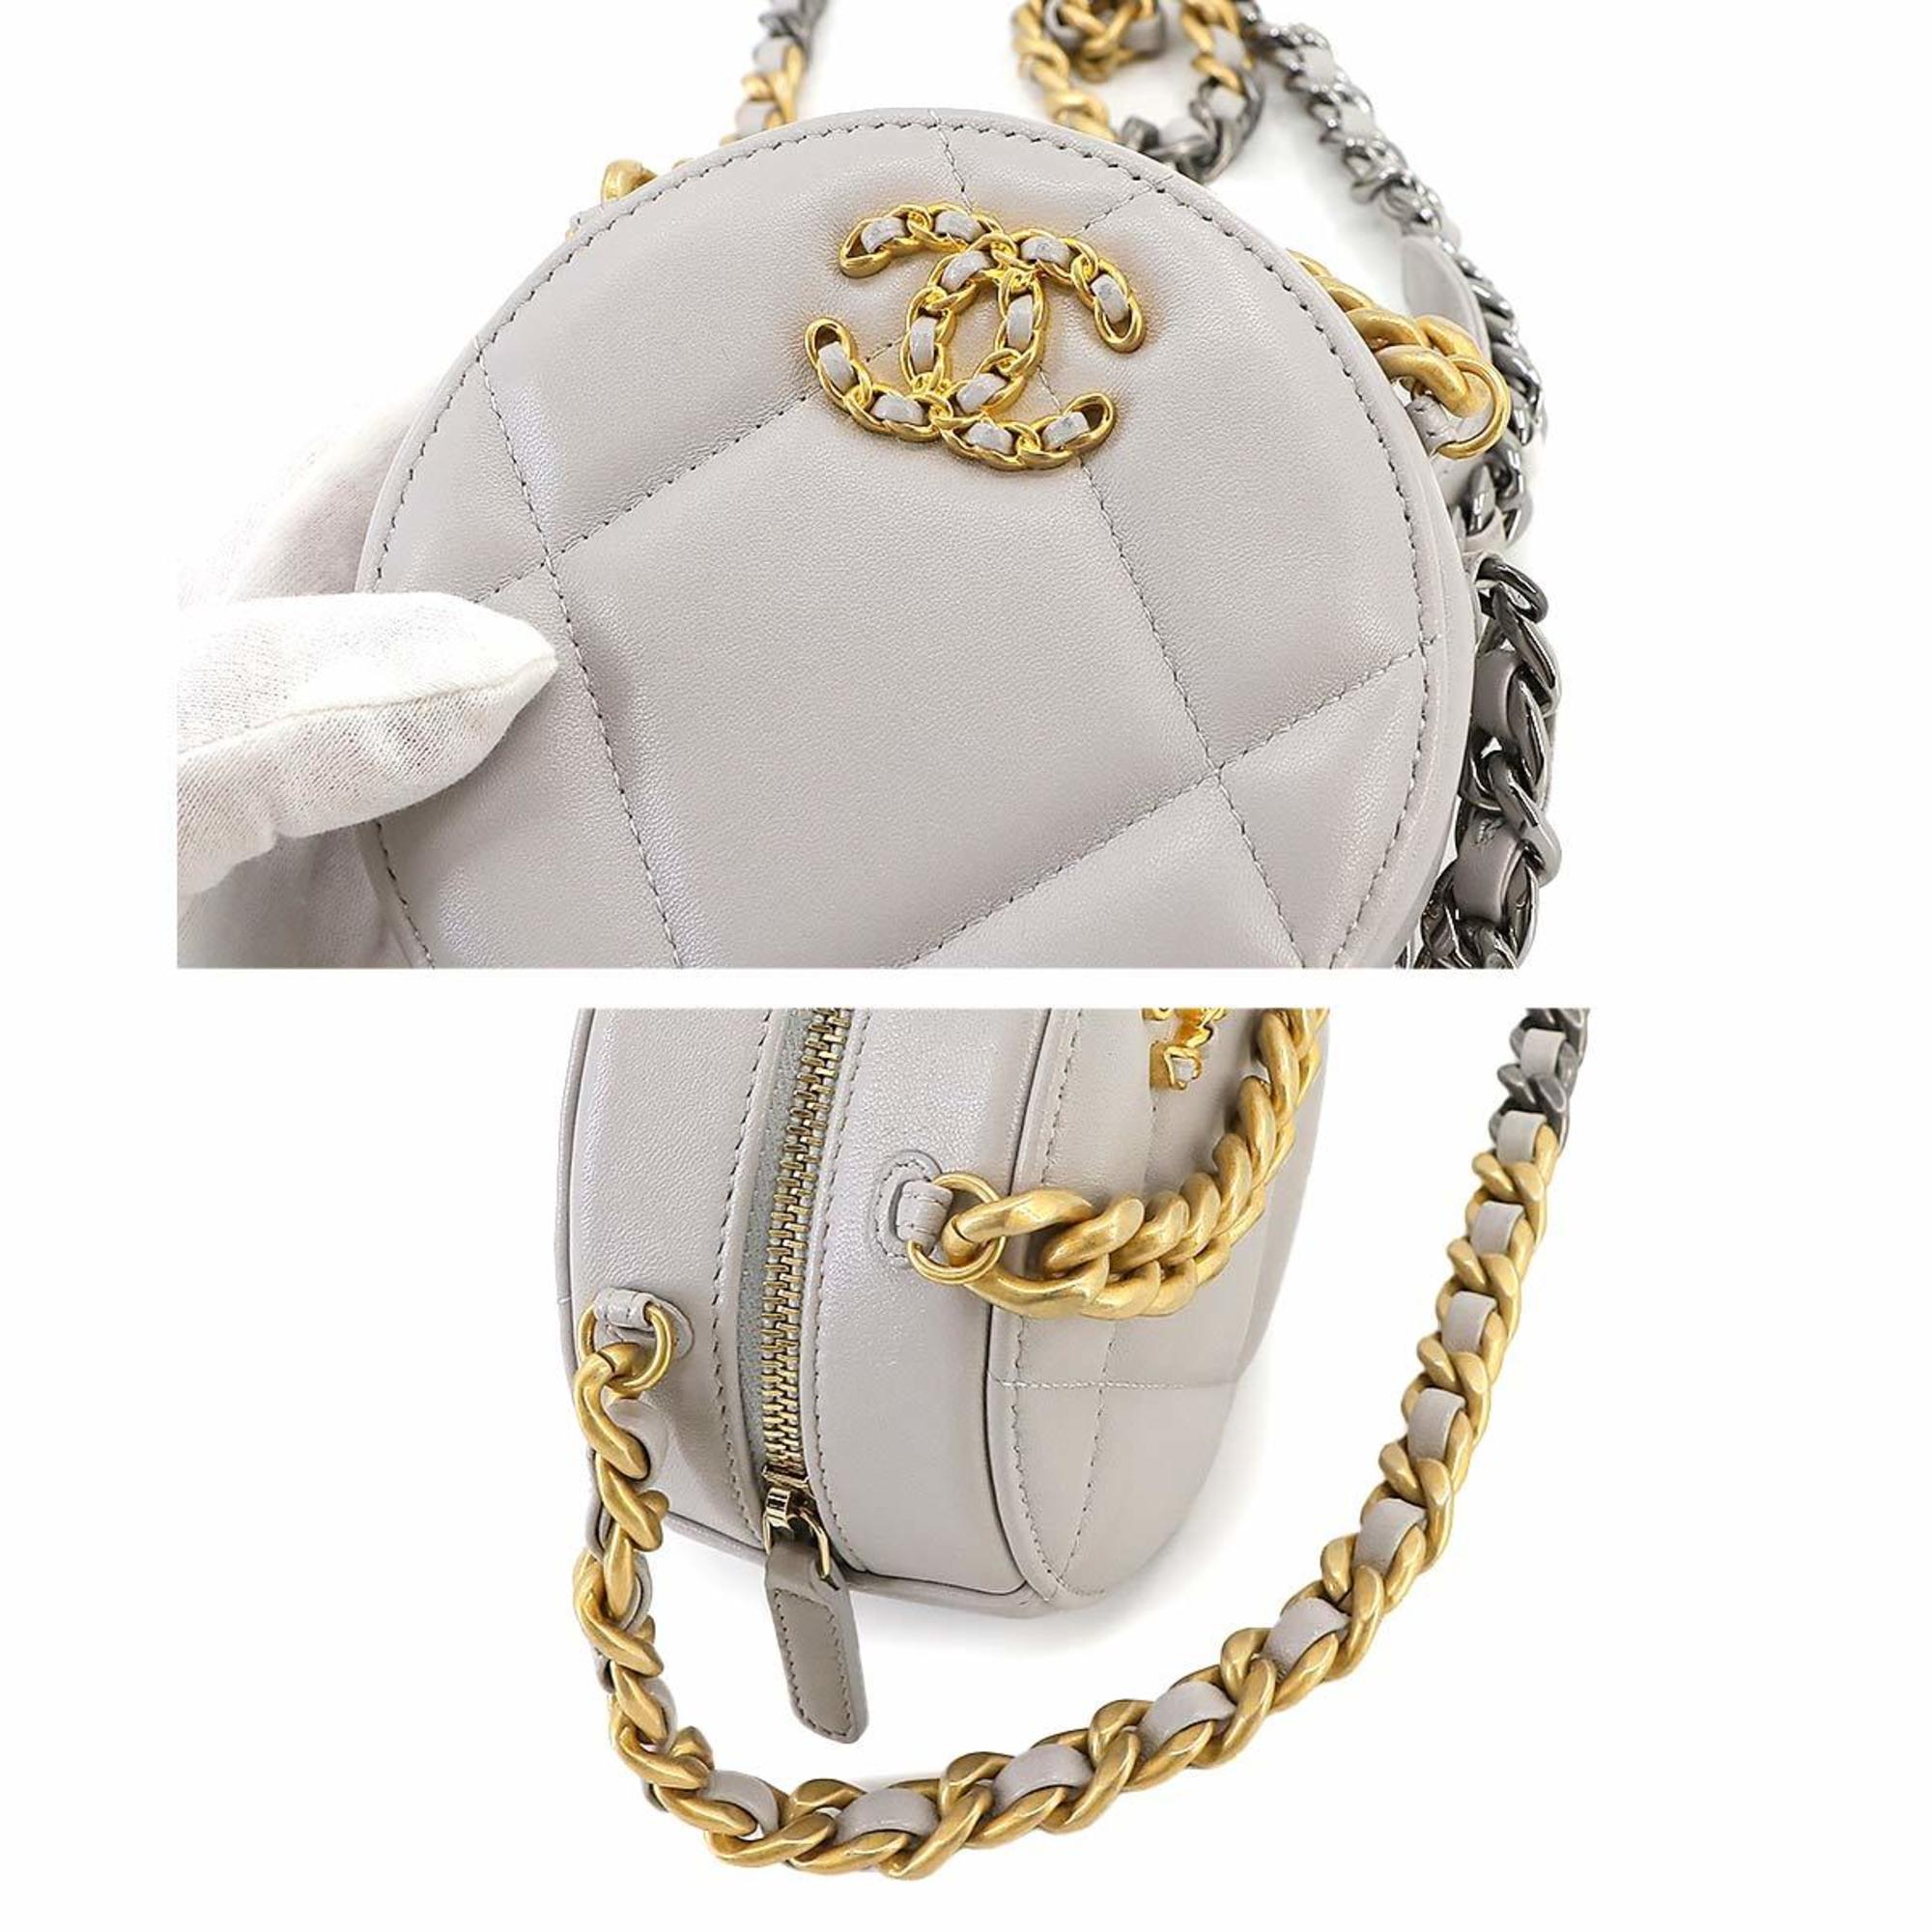 CHANEL 19 Round Clutch Chain Shoulder Bag Leather Grey AP0945 Chanel